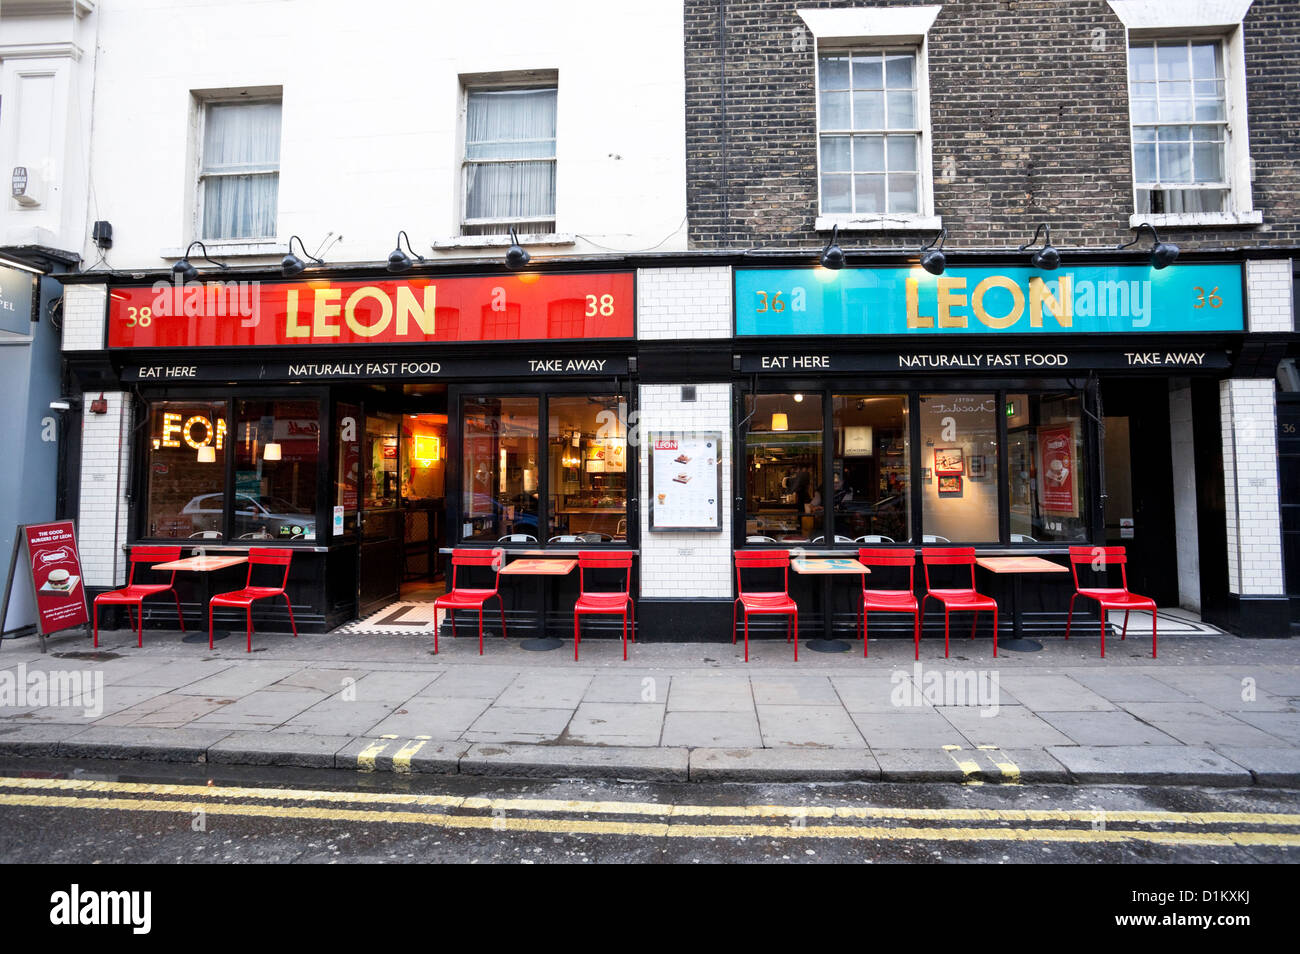 Leon fast food restaurant, Old Compton Street, Soho, London, England, UK. Stock Photo